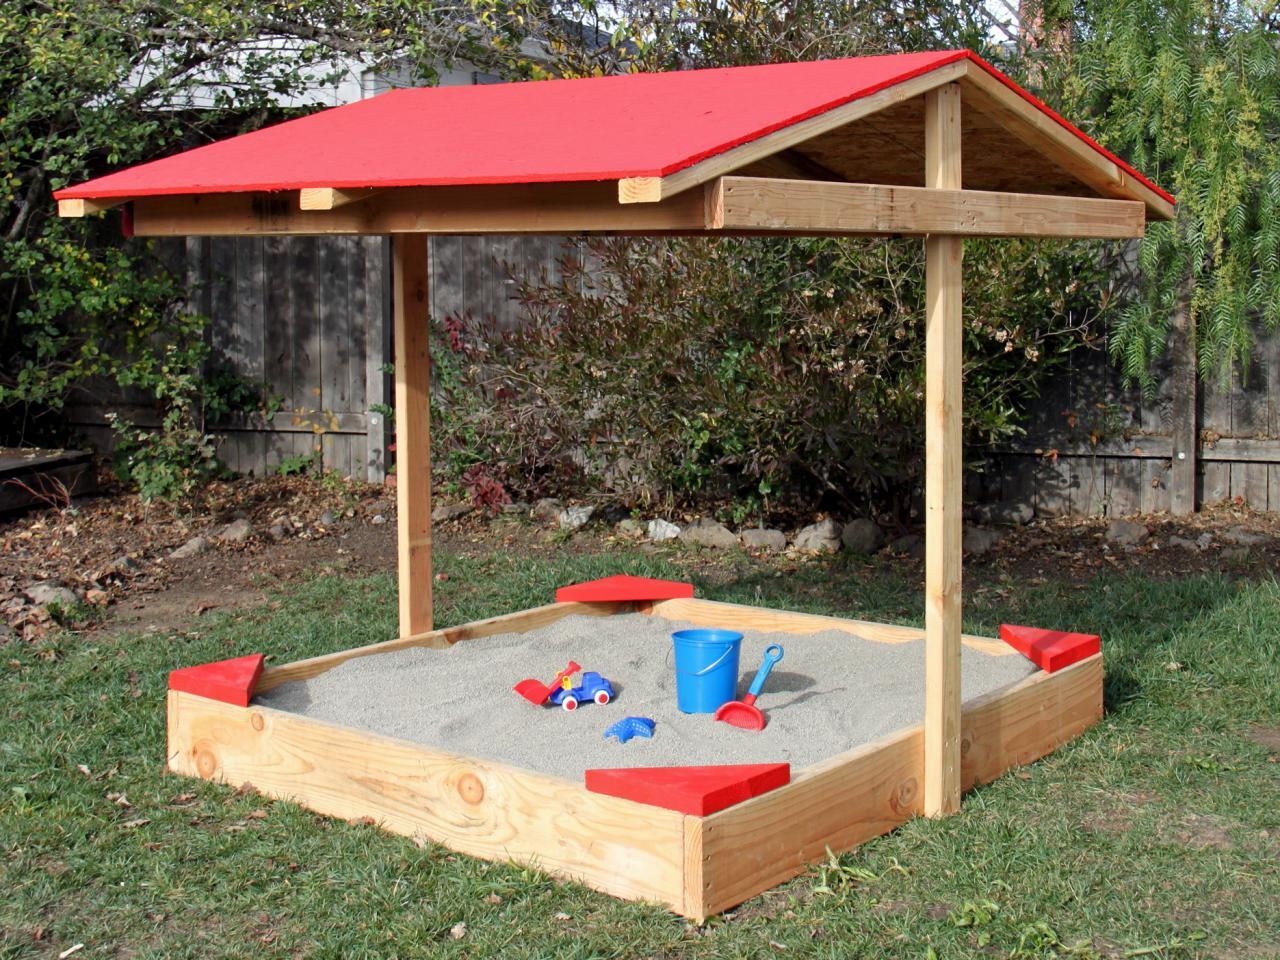 DIY Sandbox: Create Your Own Backyard Play Area